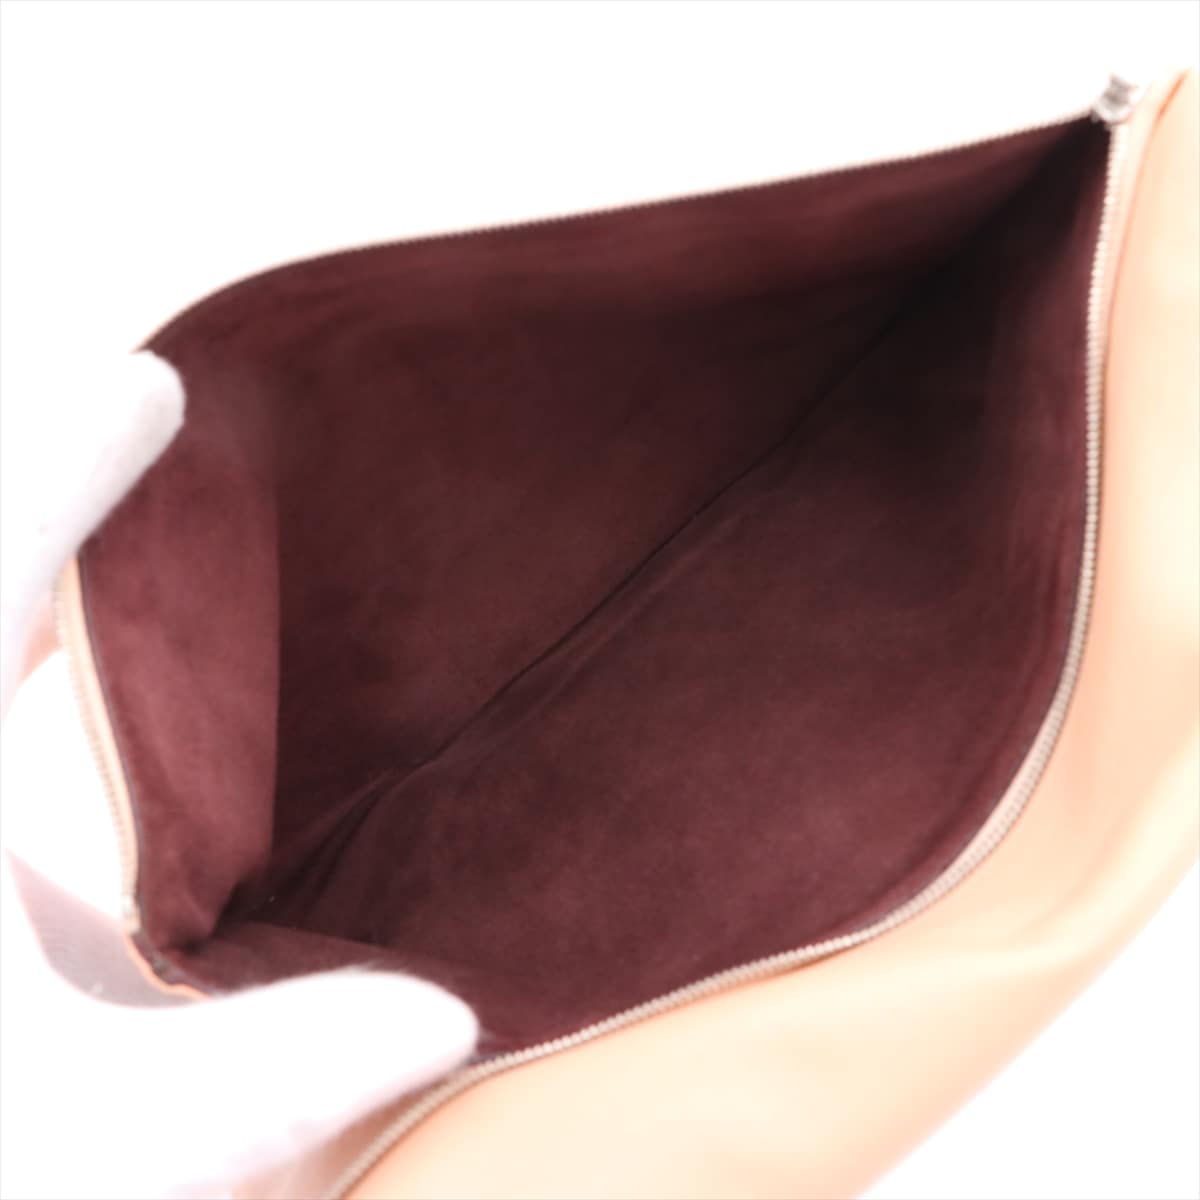 CELINE Soft trio Leather Clutch bag Beige